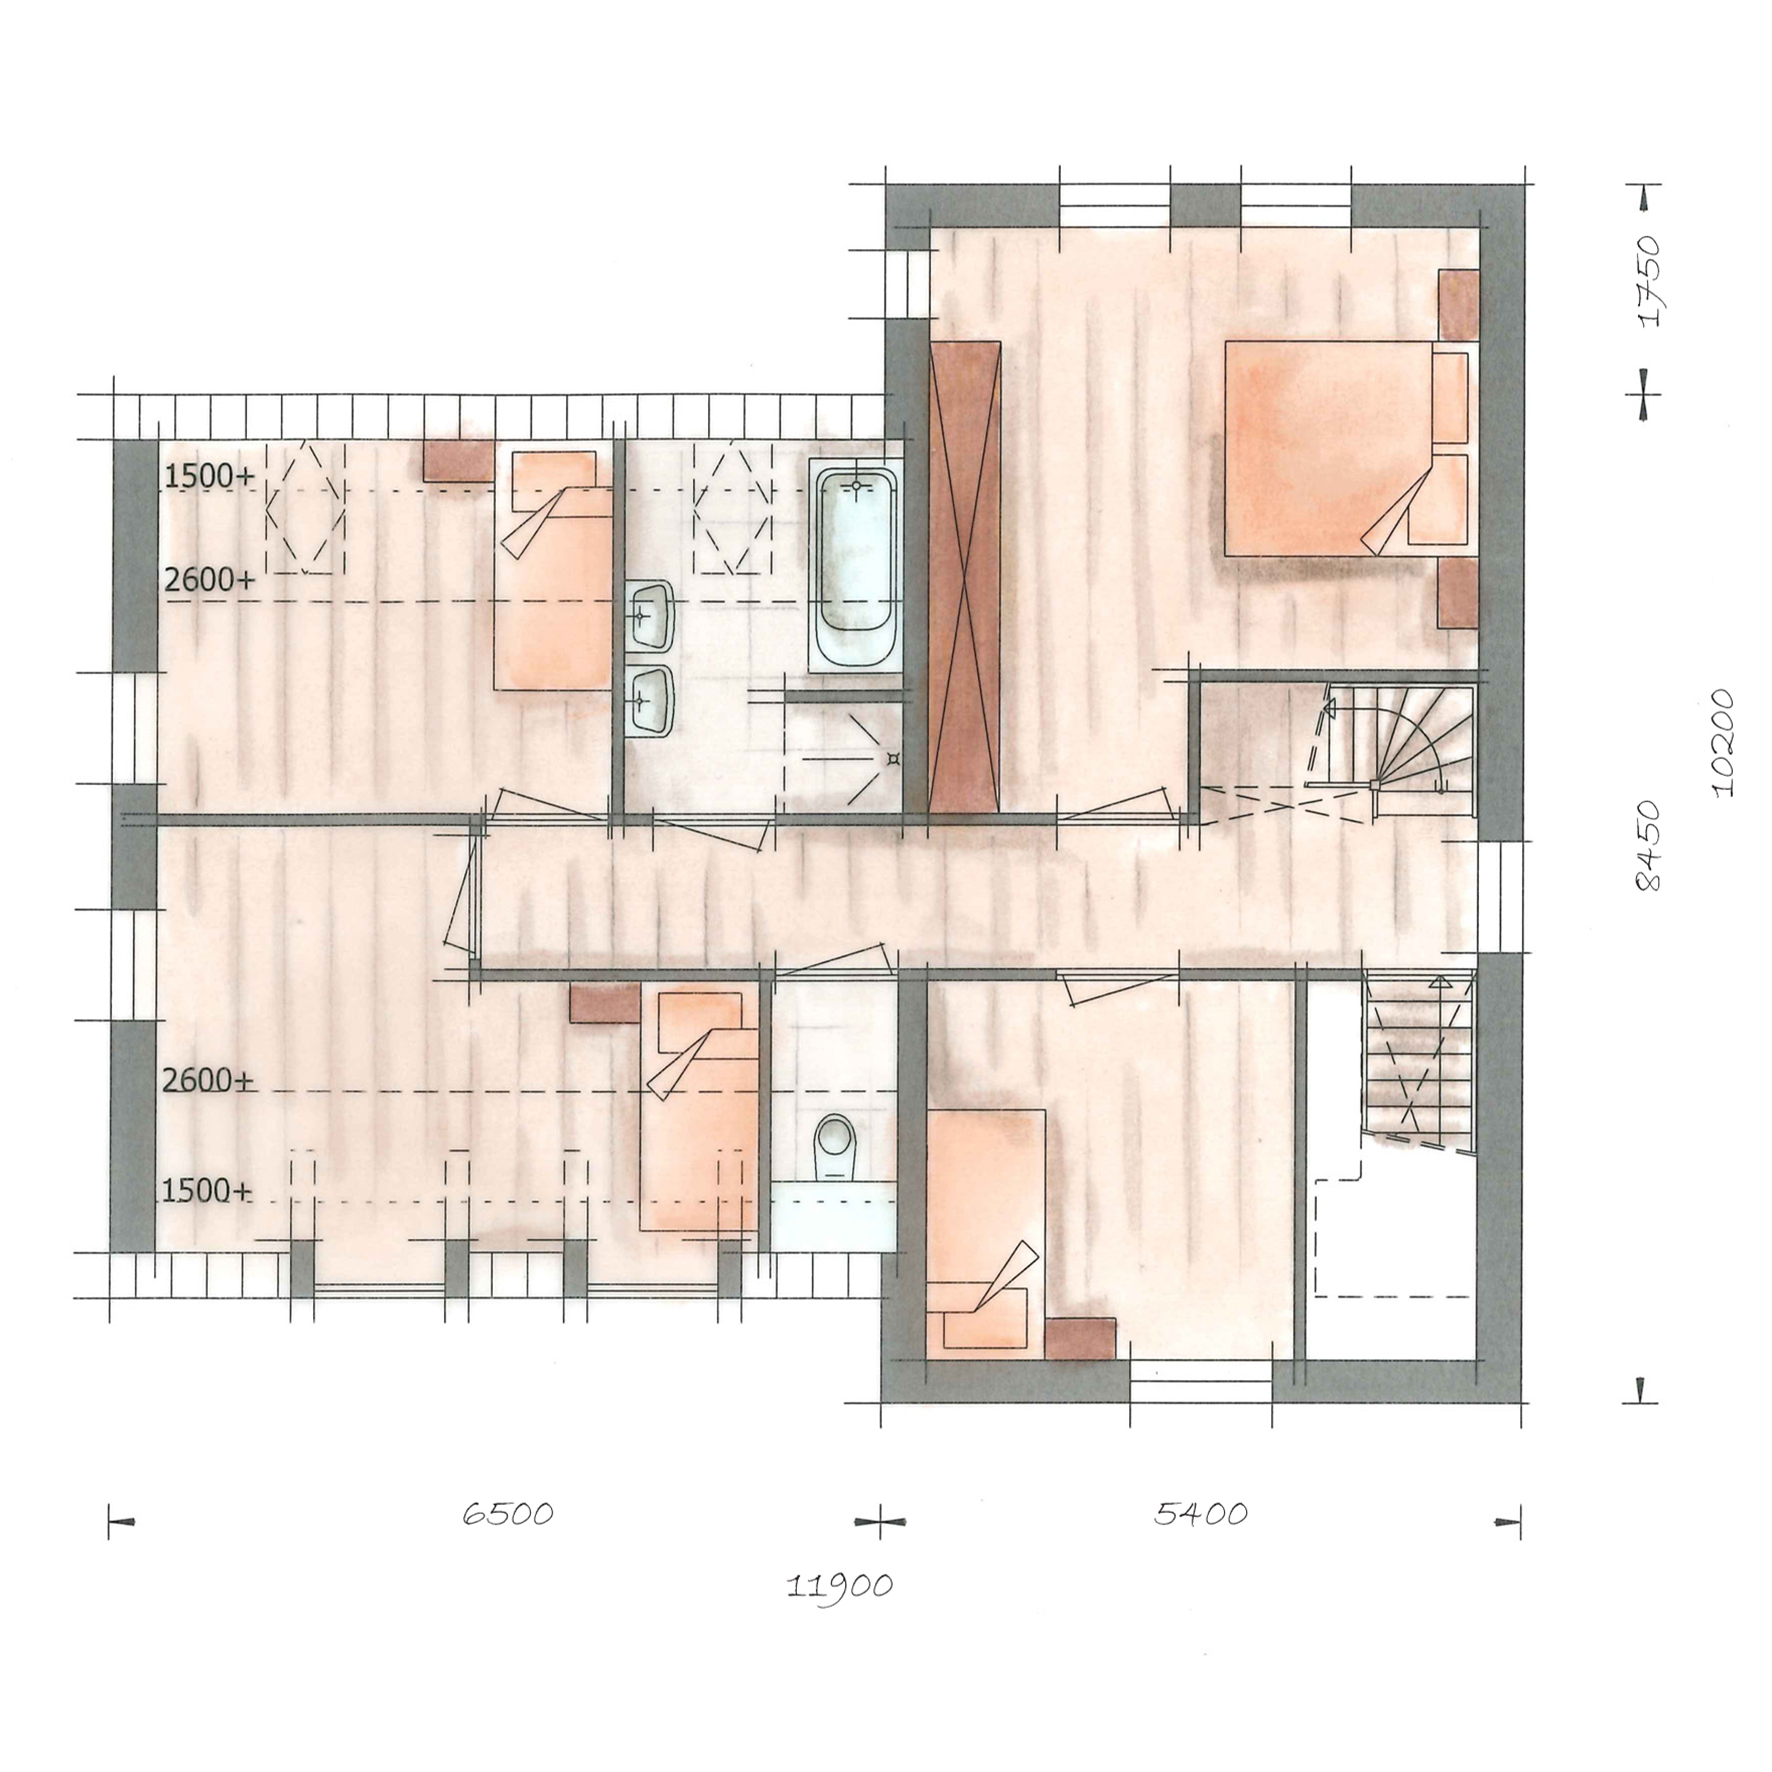 Foto: Huis bouwen  ndash  villatype Vuurvlinder plattegrond verdieping   Architectuurwonen